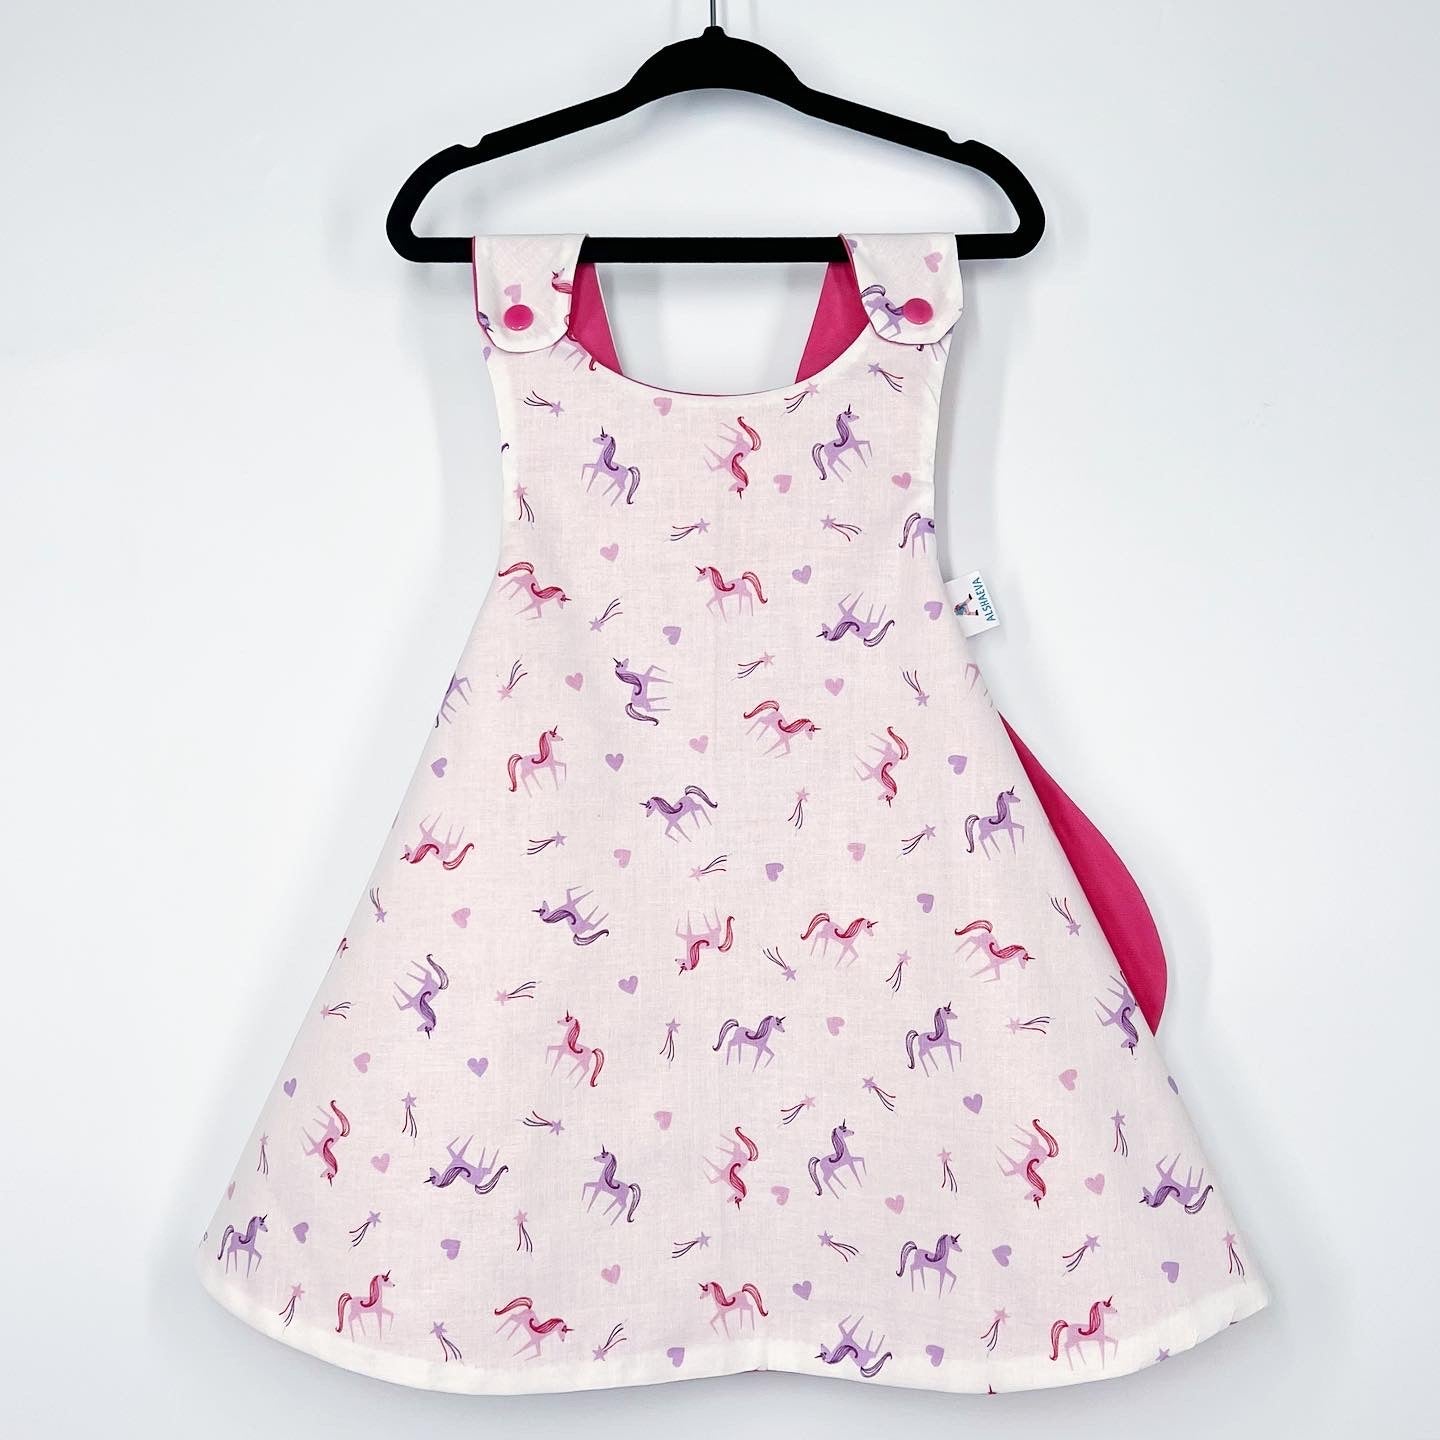 Reversible cotton dress “Pink polka dots”